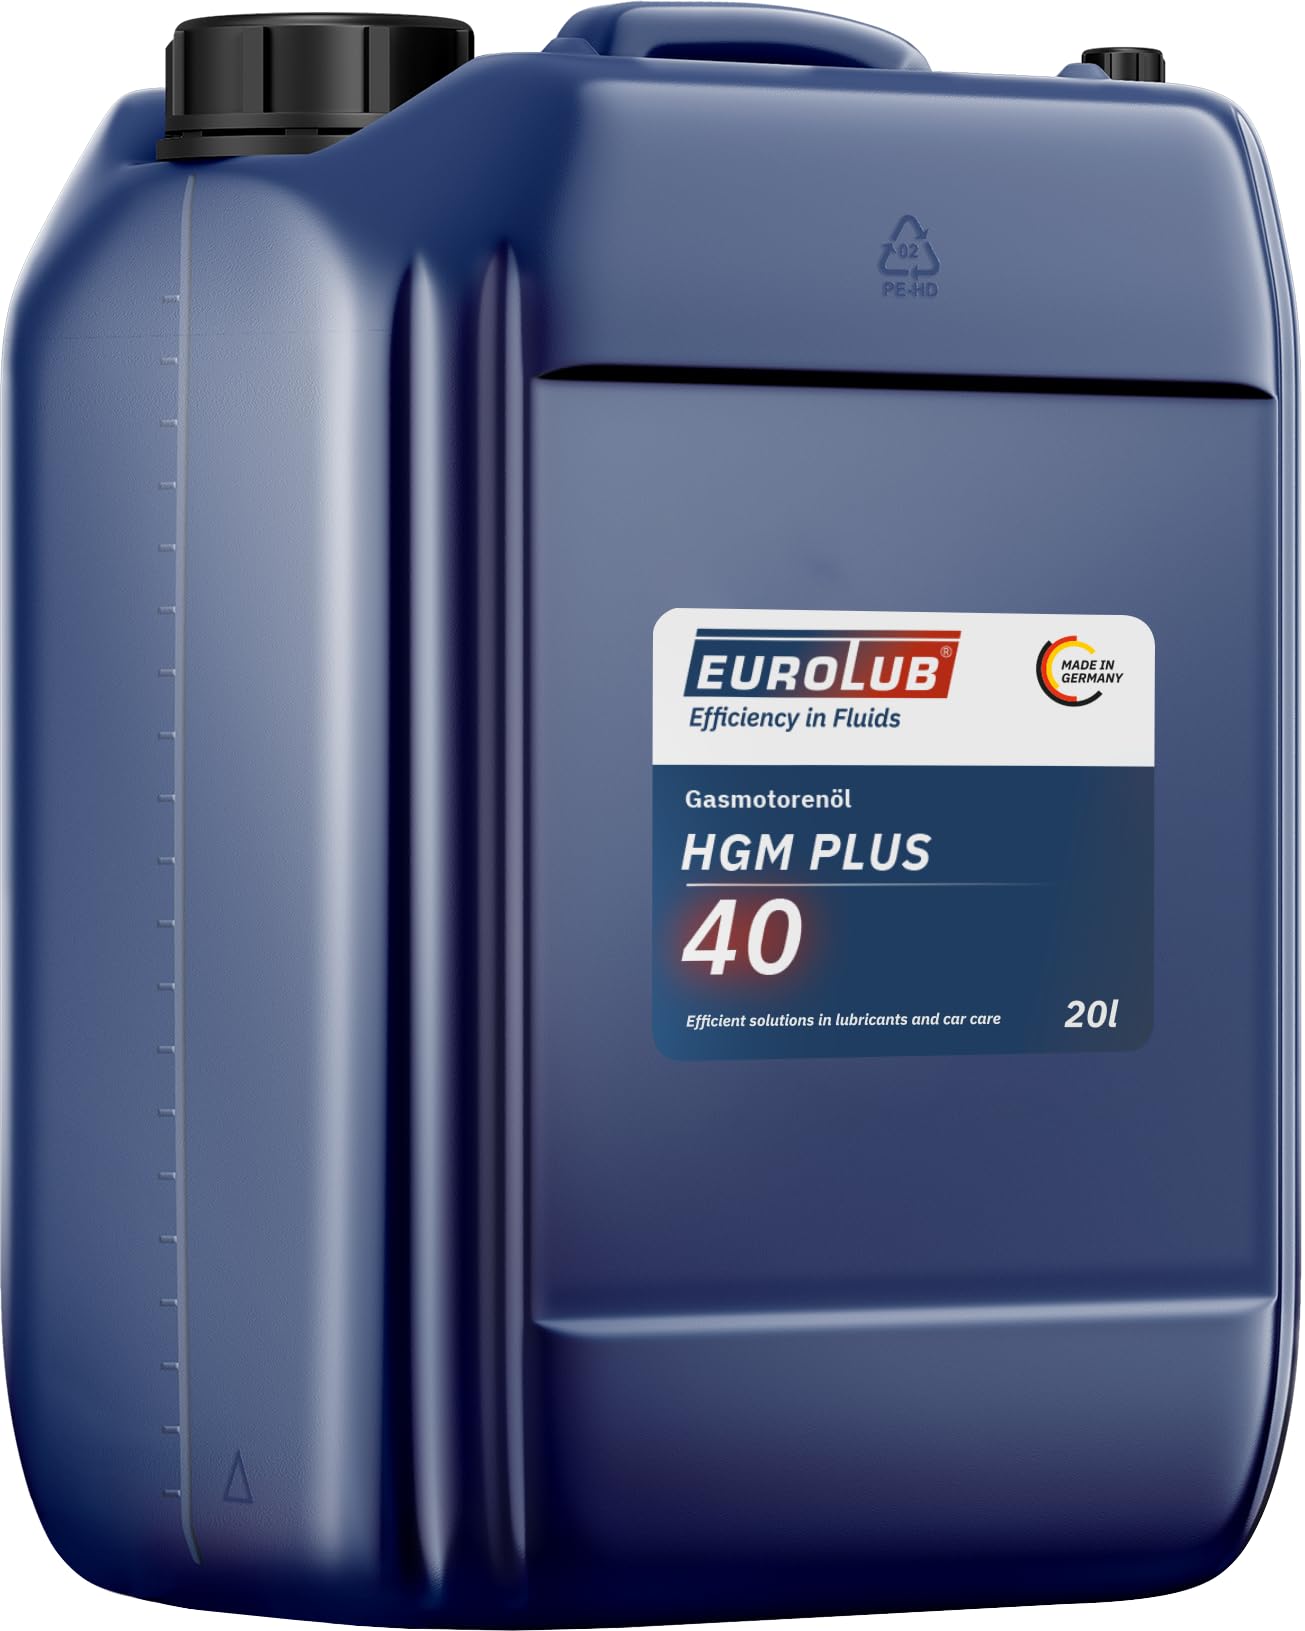 EUROLUB HGM PLUS SAE 40 Gasmotorenöl, 20 Liter von EUROLUB